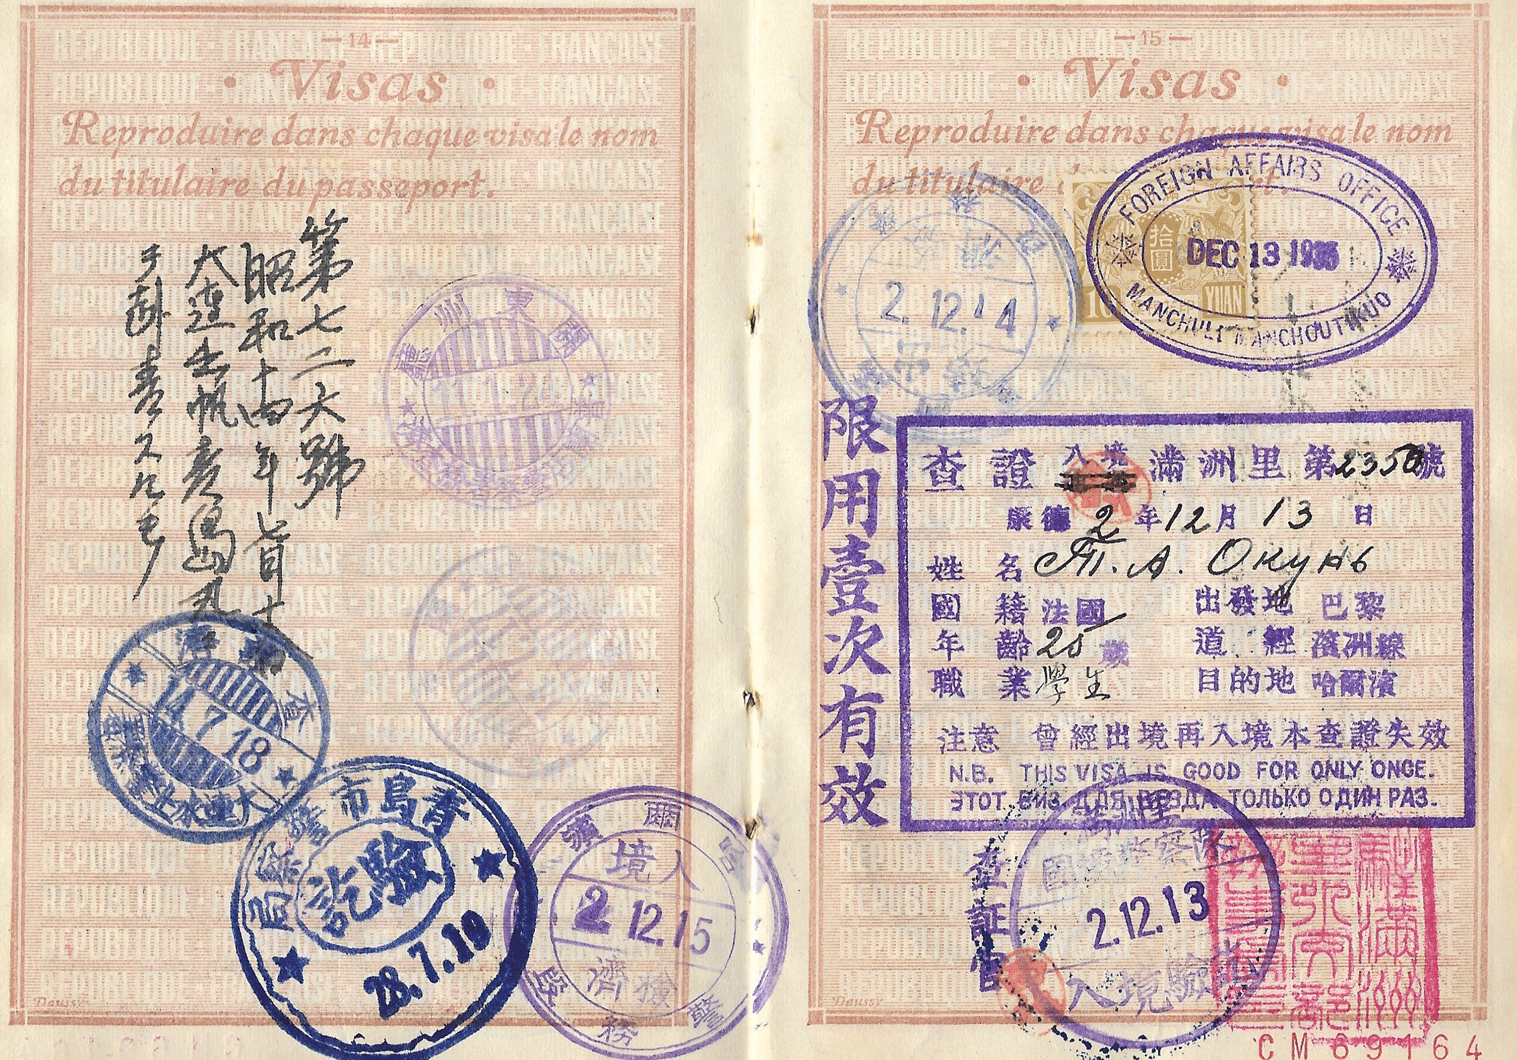 WW2 Manchurian visa